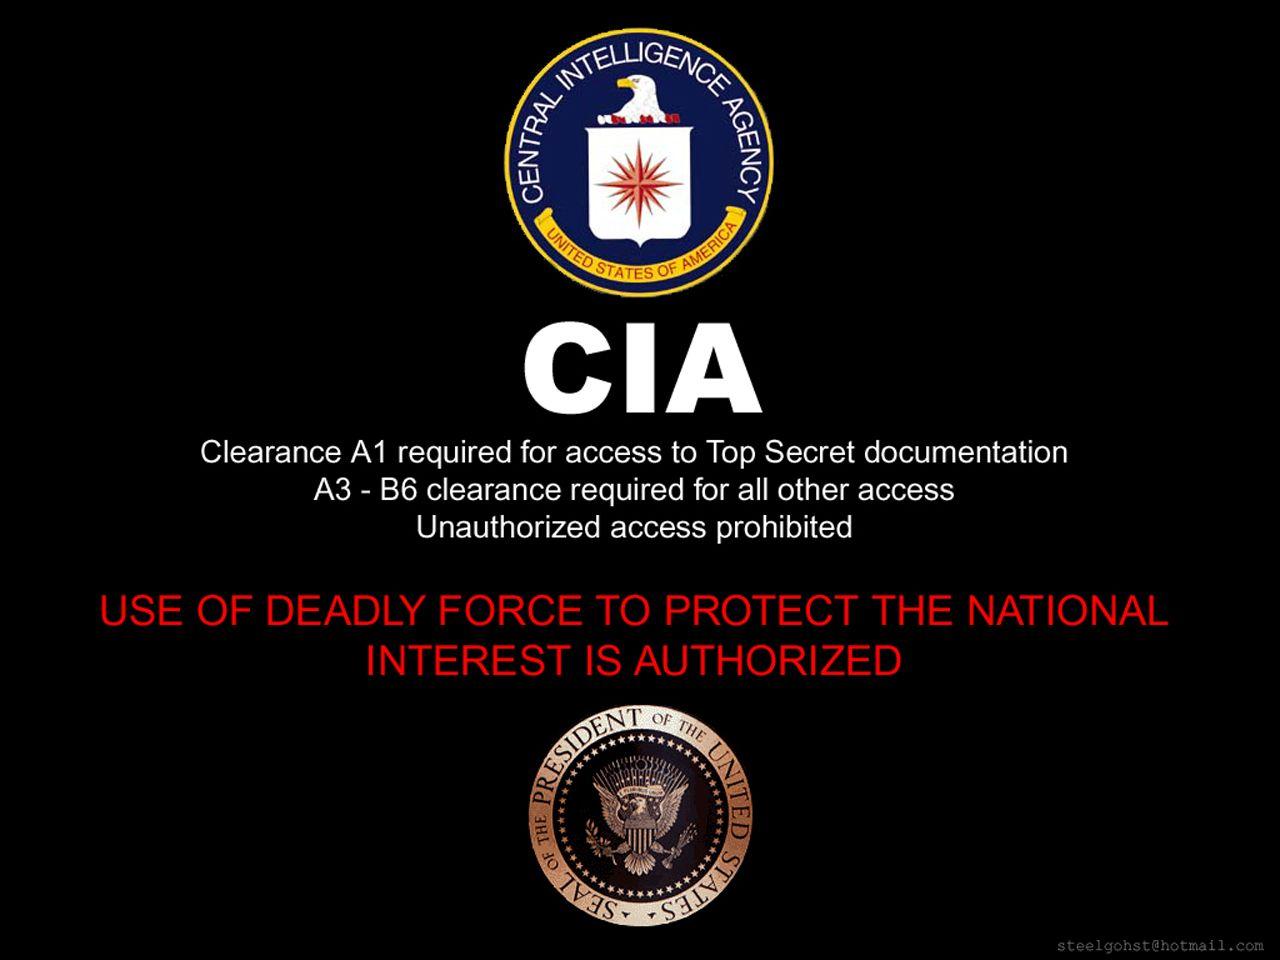 cia: wallpaper central intelligence agency